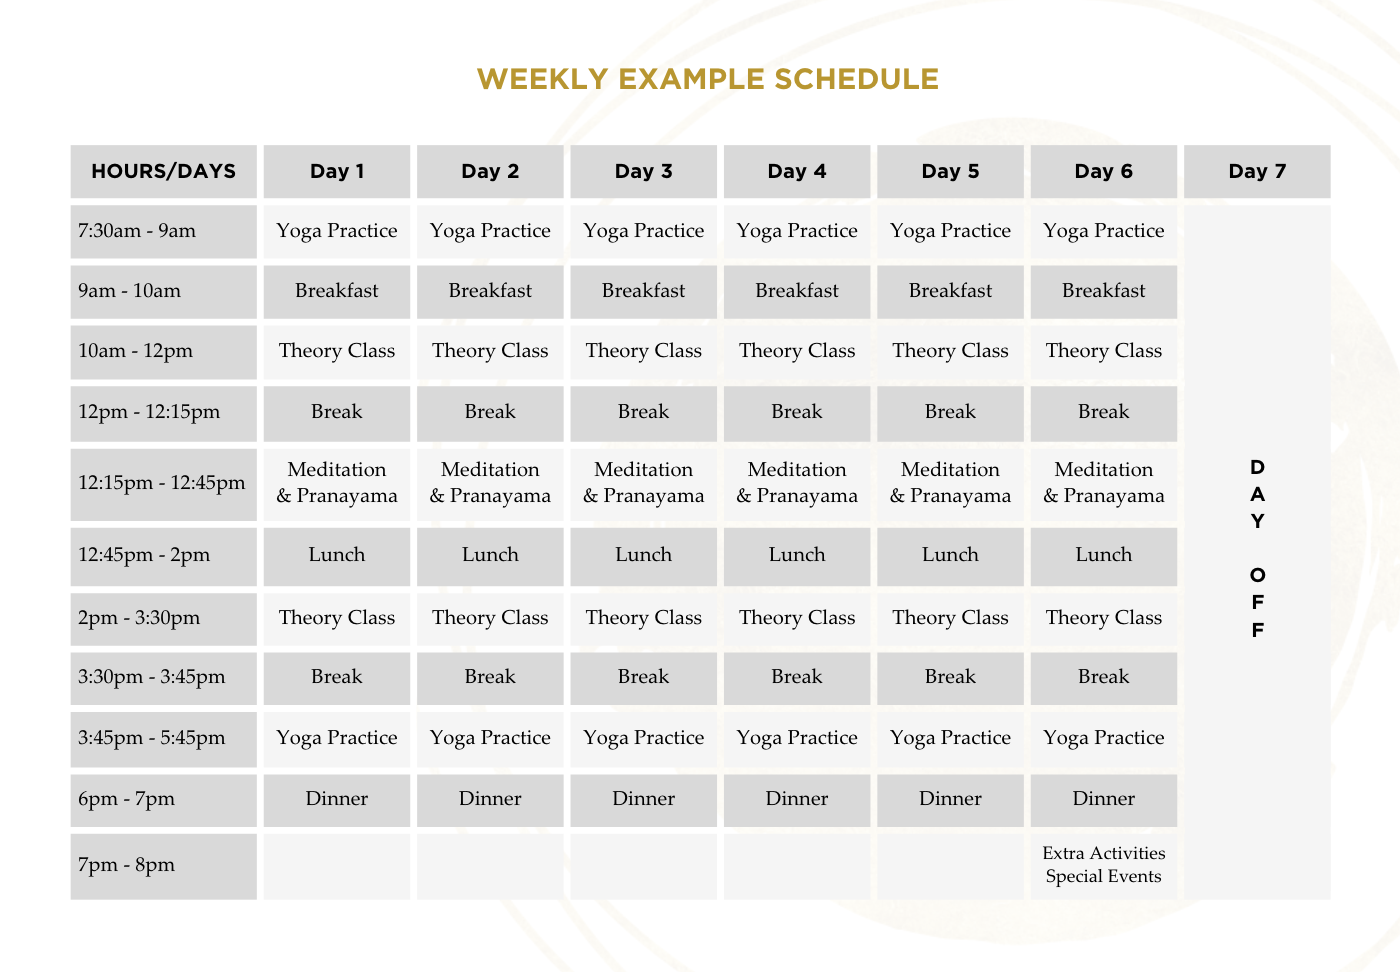 Weekly Example Schedule